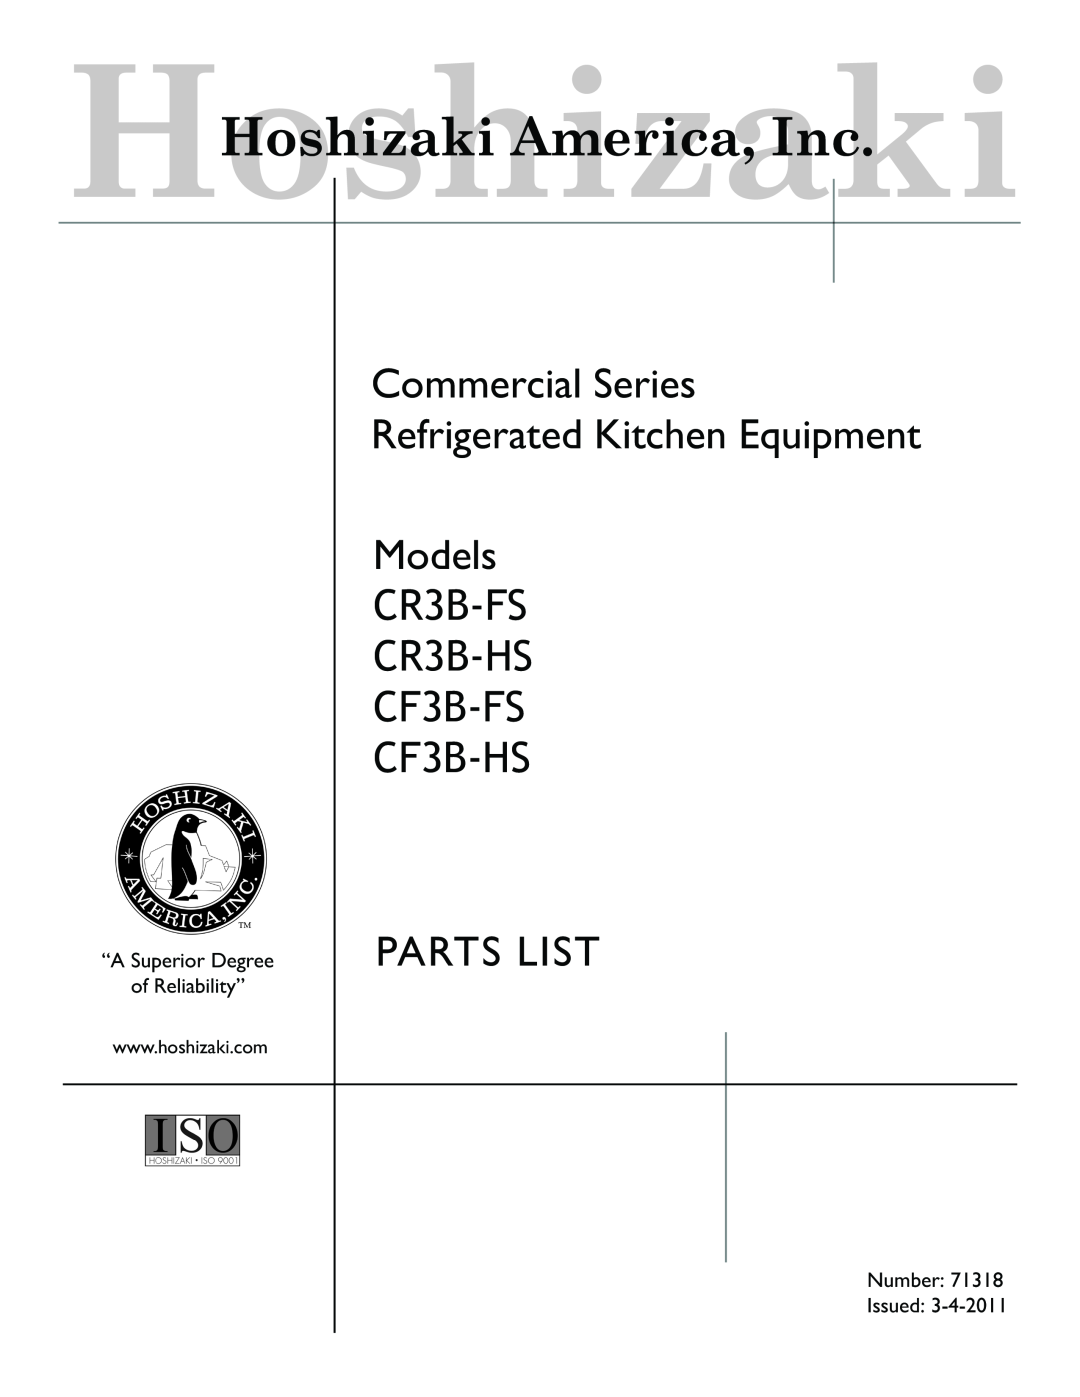 Hoshizaki manual Commercial Series Refrigerated Kitchen Equipment, Models, CR3B-FS CR3B-HS CF3B-FS CF3B-HS, Parts List 